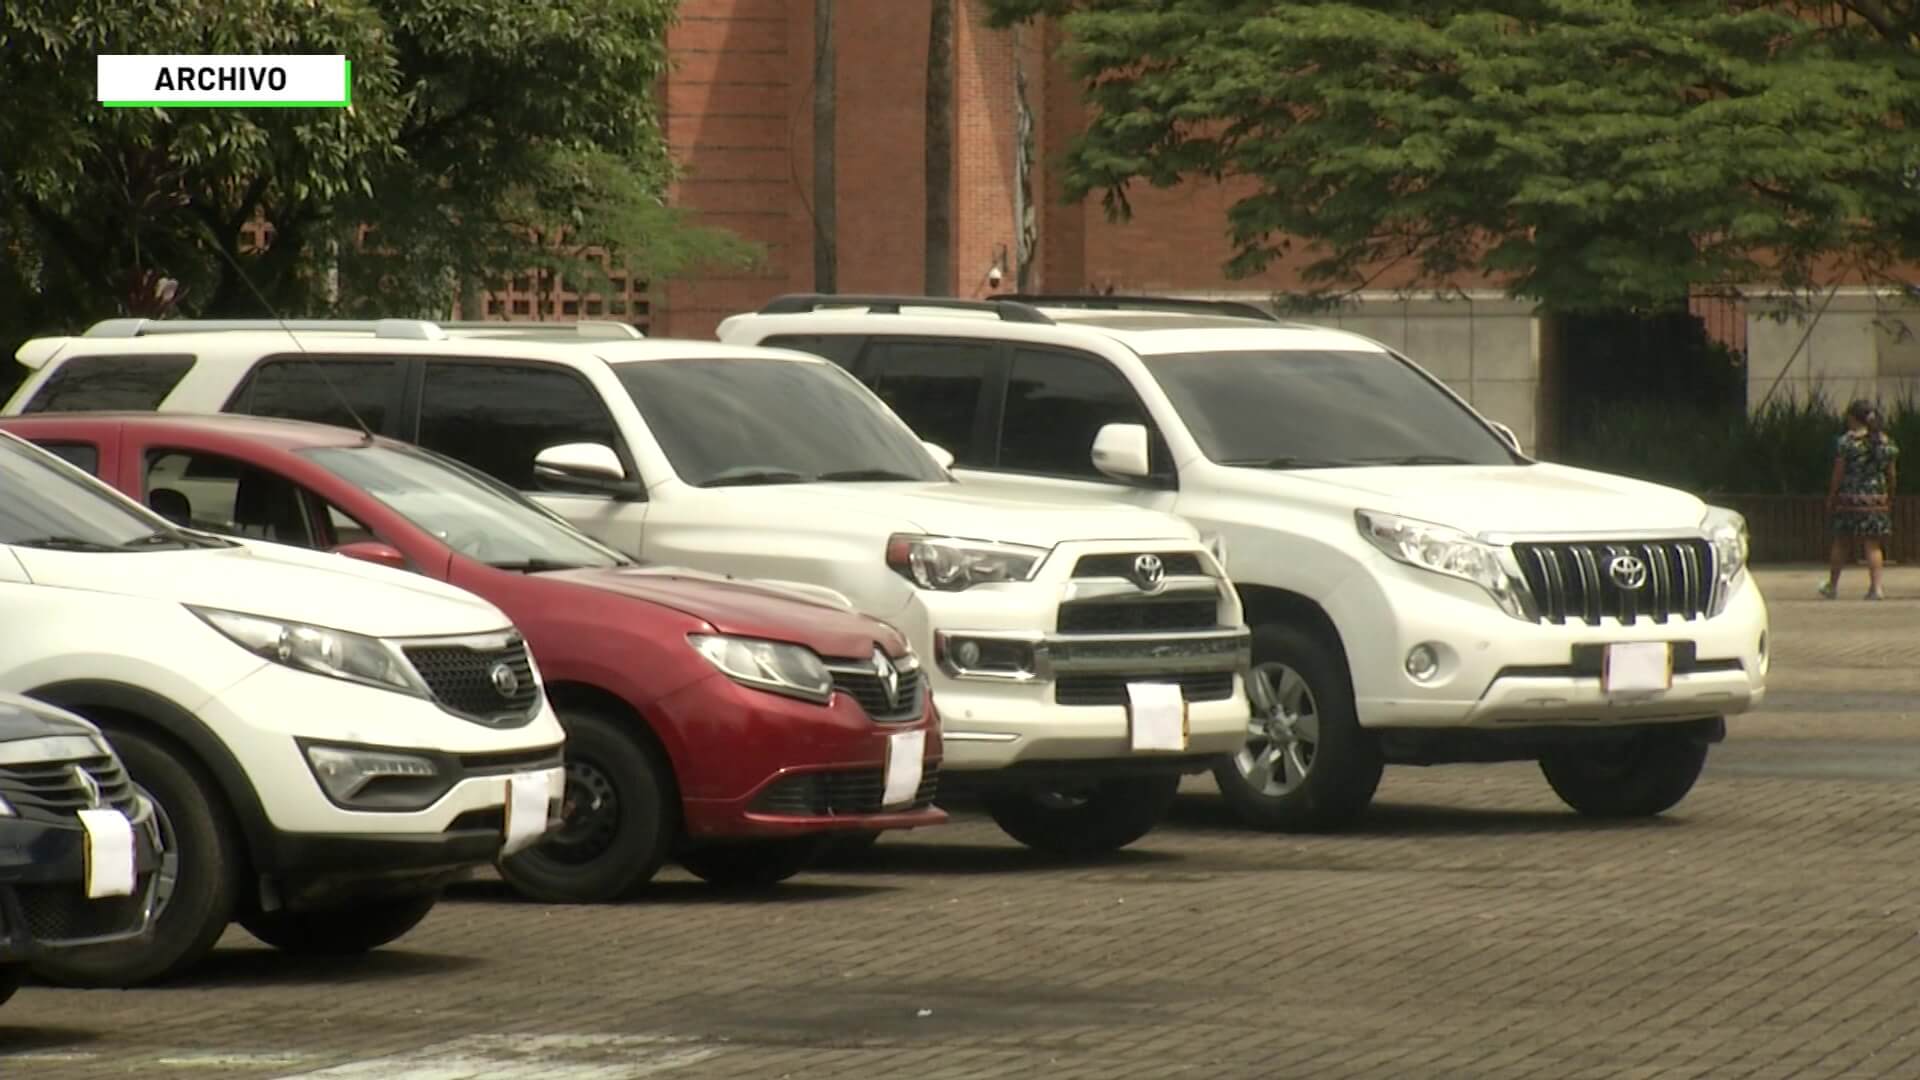 Autoridades recuperaron 73 vehículos robados